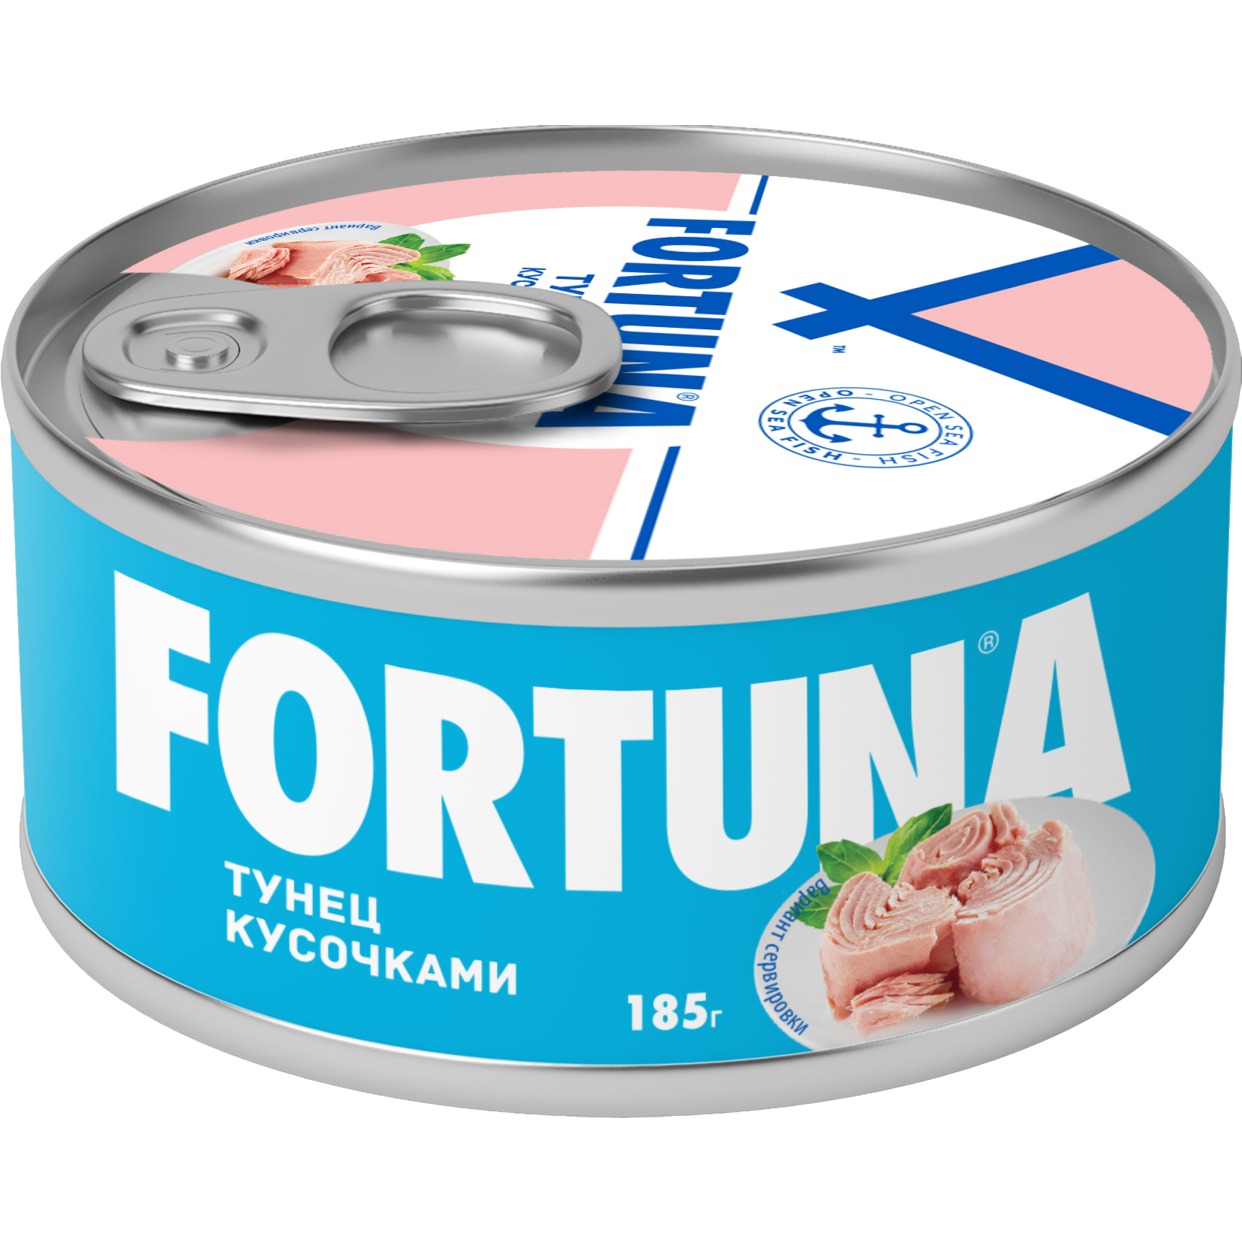 Тунец Fortuna, 185 г